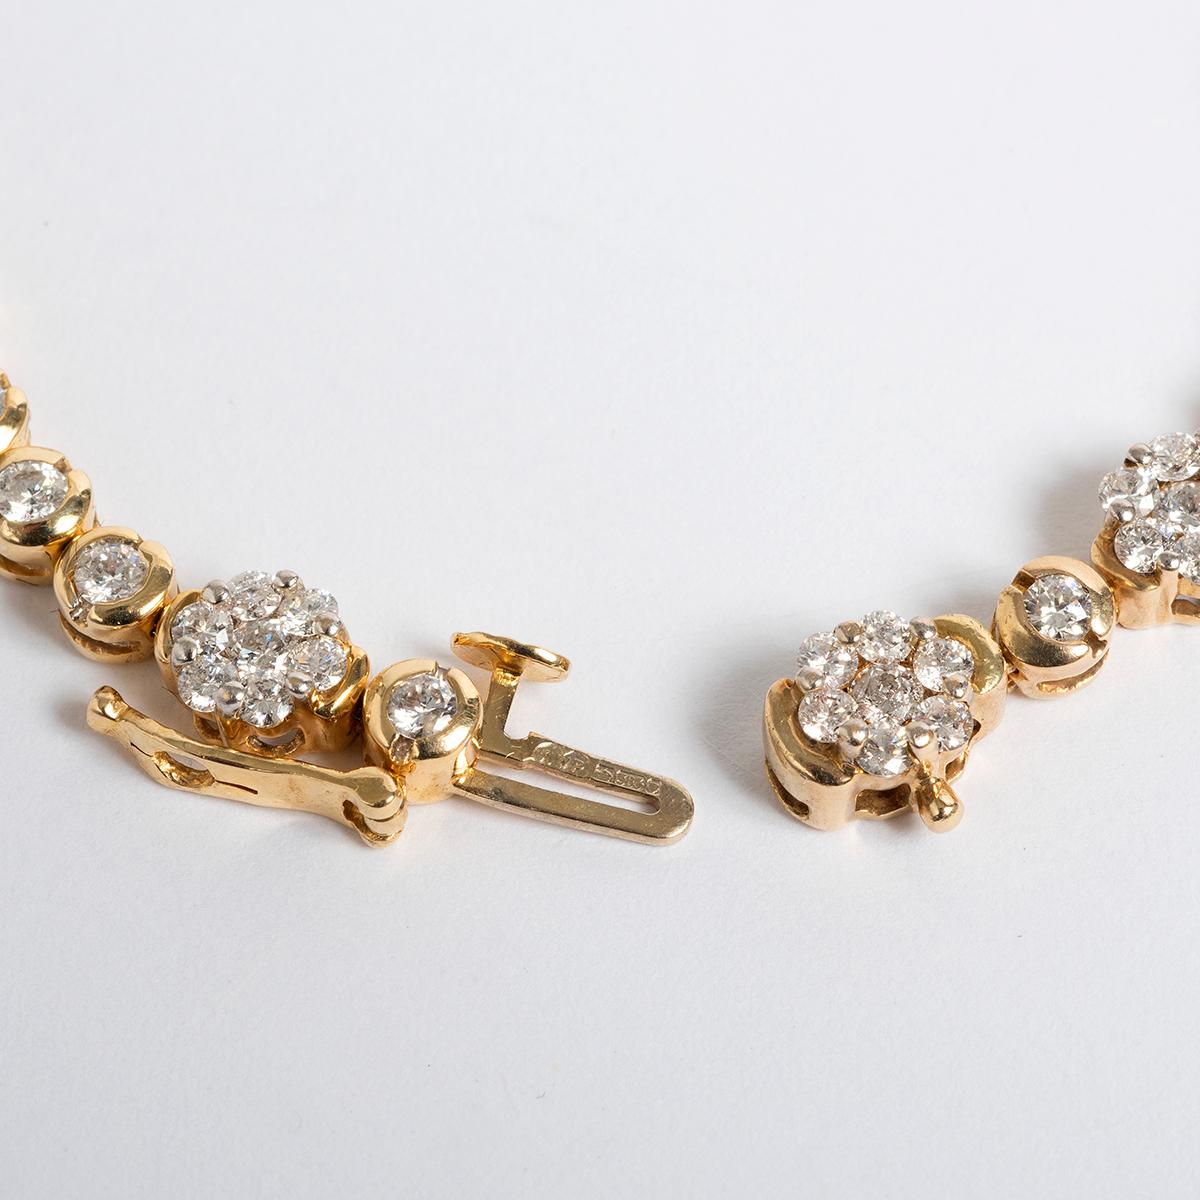 Round Cut Pretty Diamond Daisy Bracelet, 14 Carat Yellow Gold, Est 3.75 Carat Diamonds. For Sale